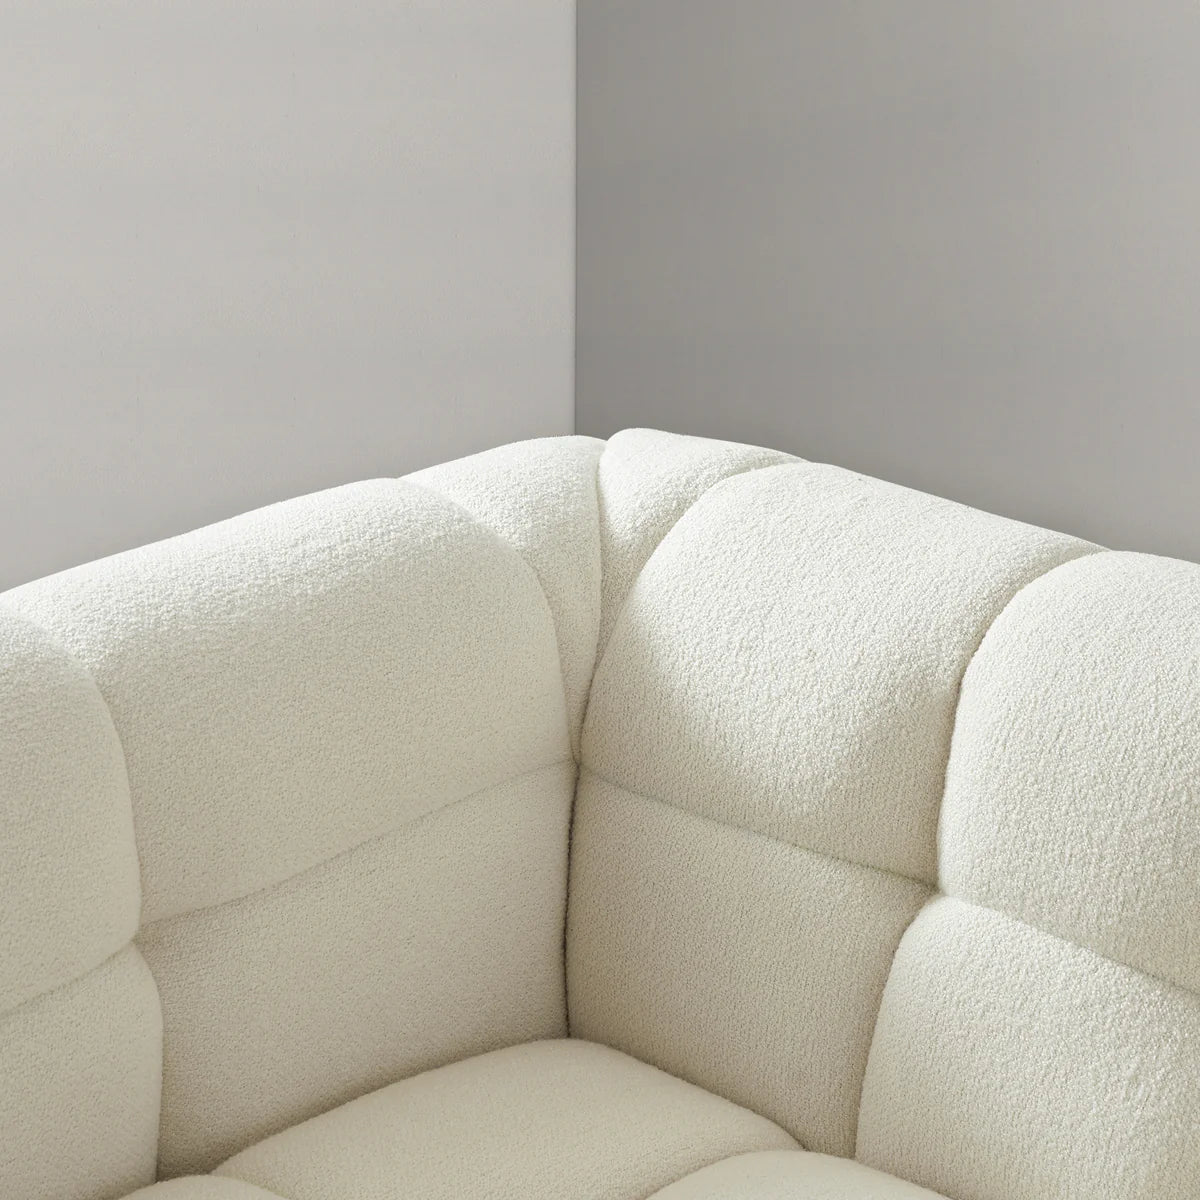 Kyla Soft Boucle Chaise L Shape Sectional Sofa